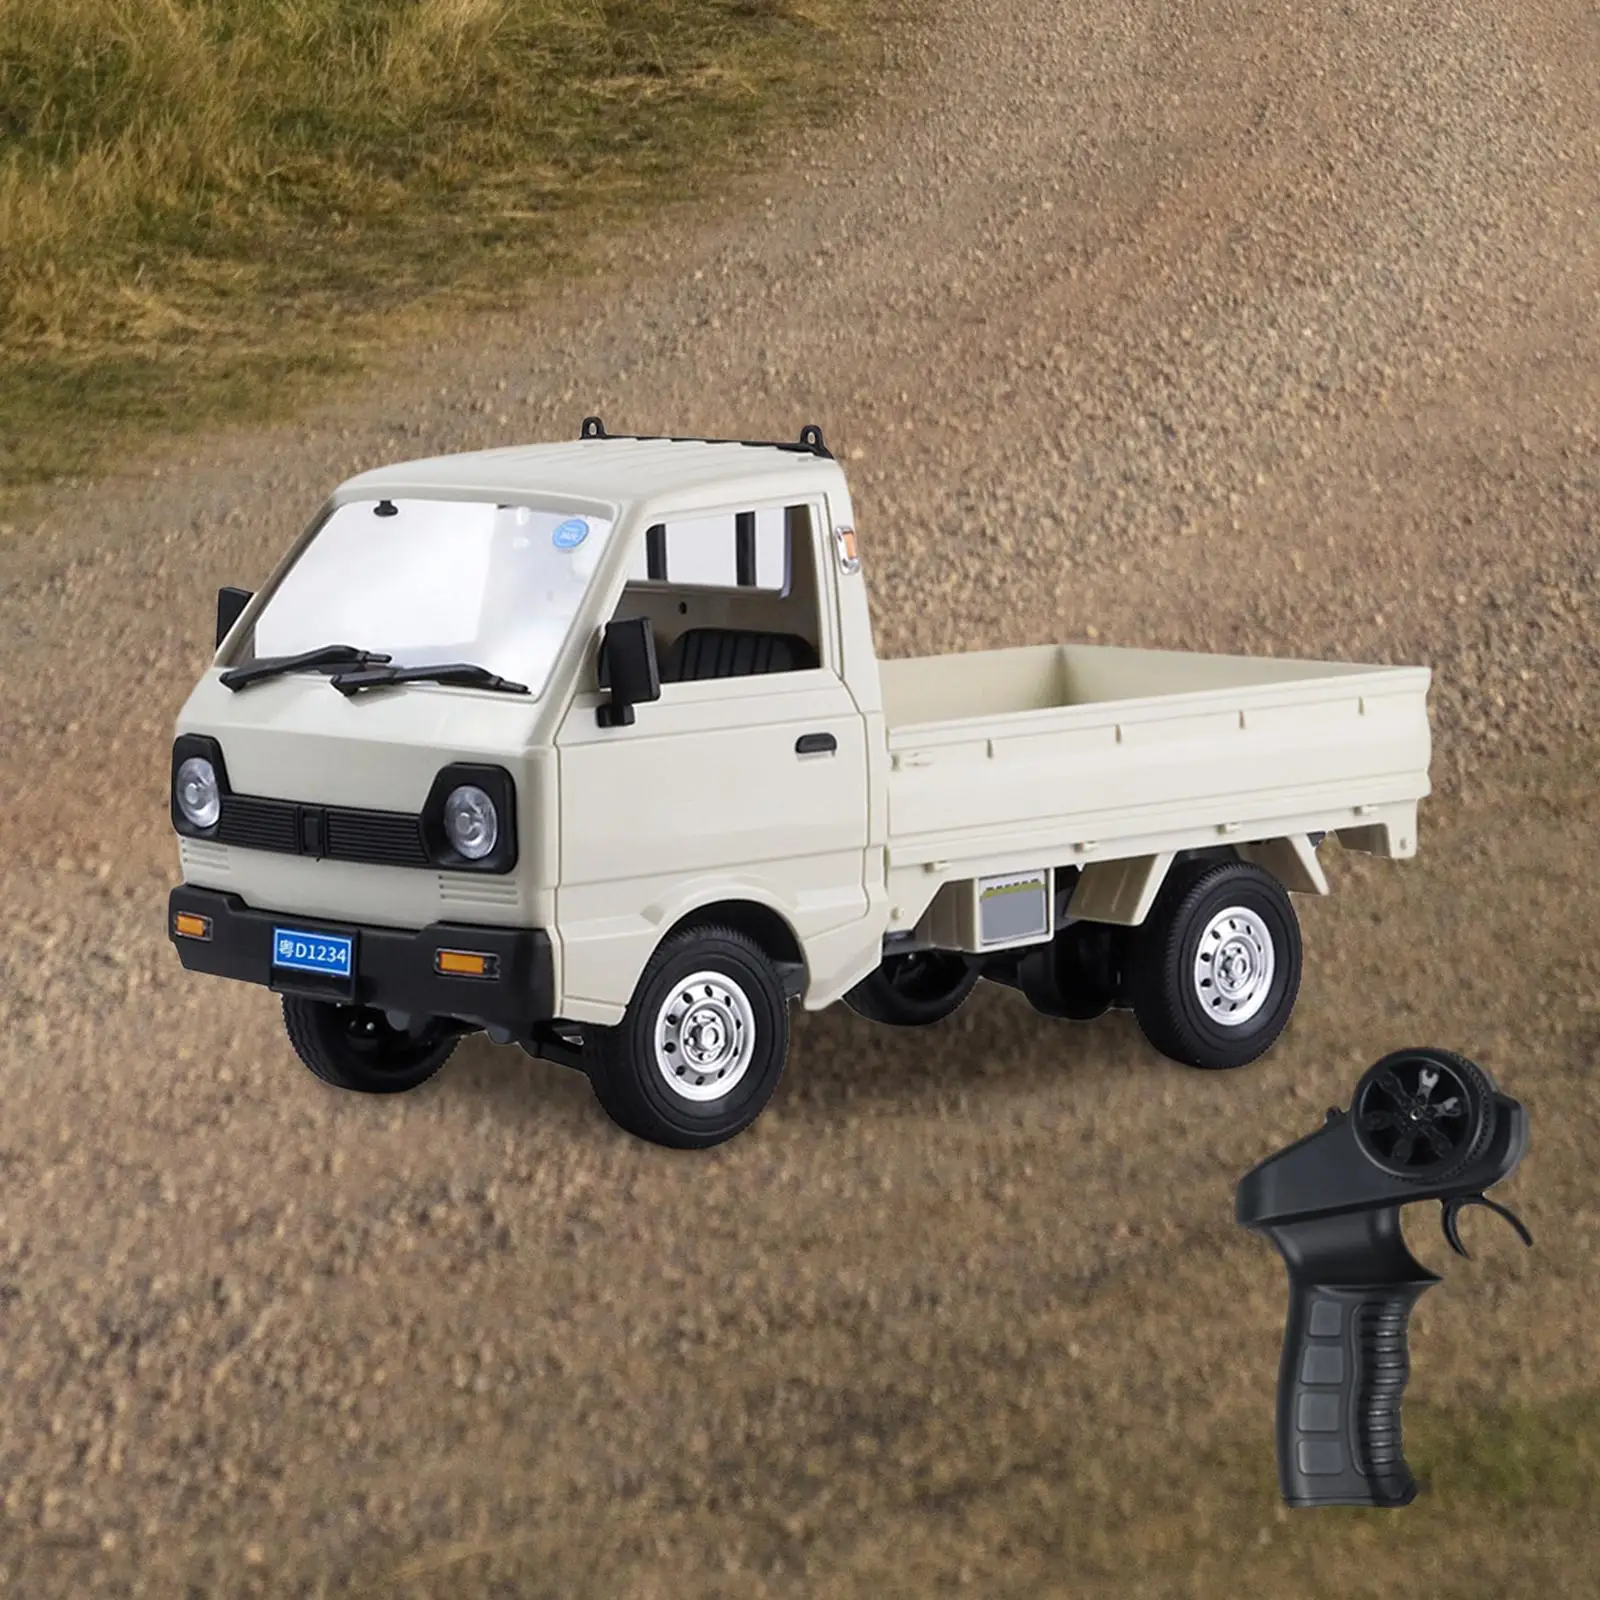 Simulation RC Truck Van Climbing Truck High Speed Radio Control Hobbyist Grade Electric Hobby Toy 2.4G Rock Crawler Car RC Toy